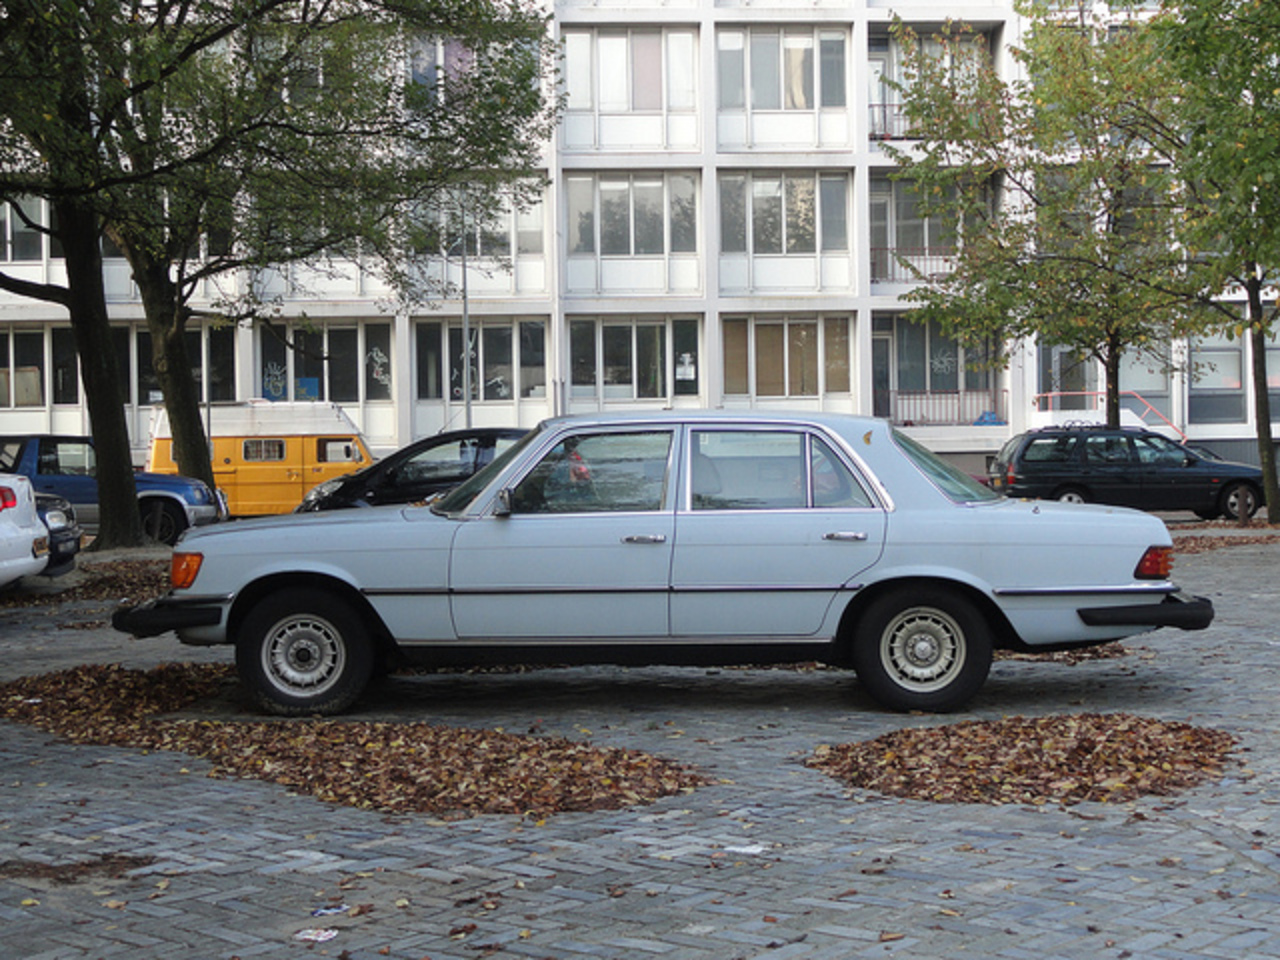 1977 Mercedes-Benz 280 SE (US spec) | Flickr - Photo Sharing!